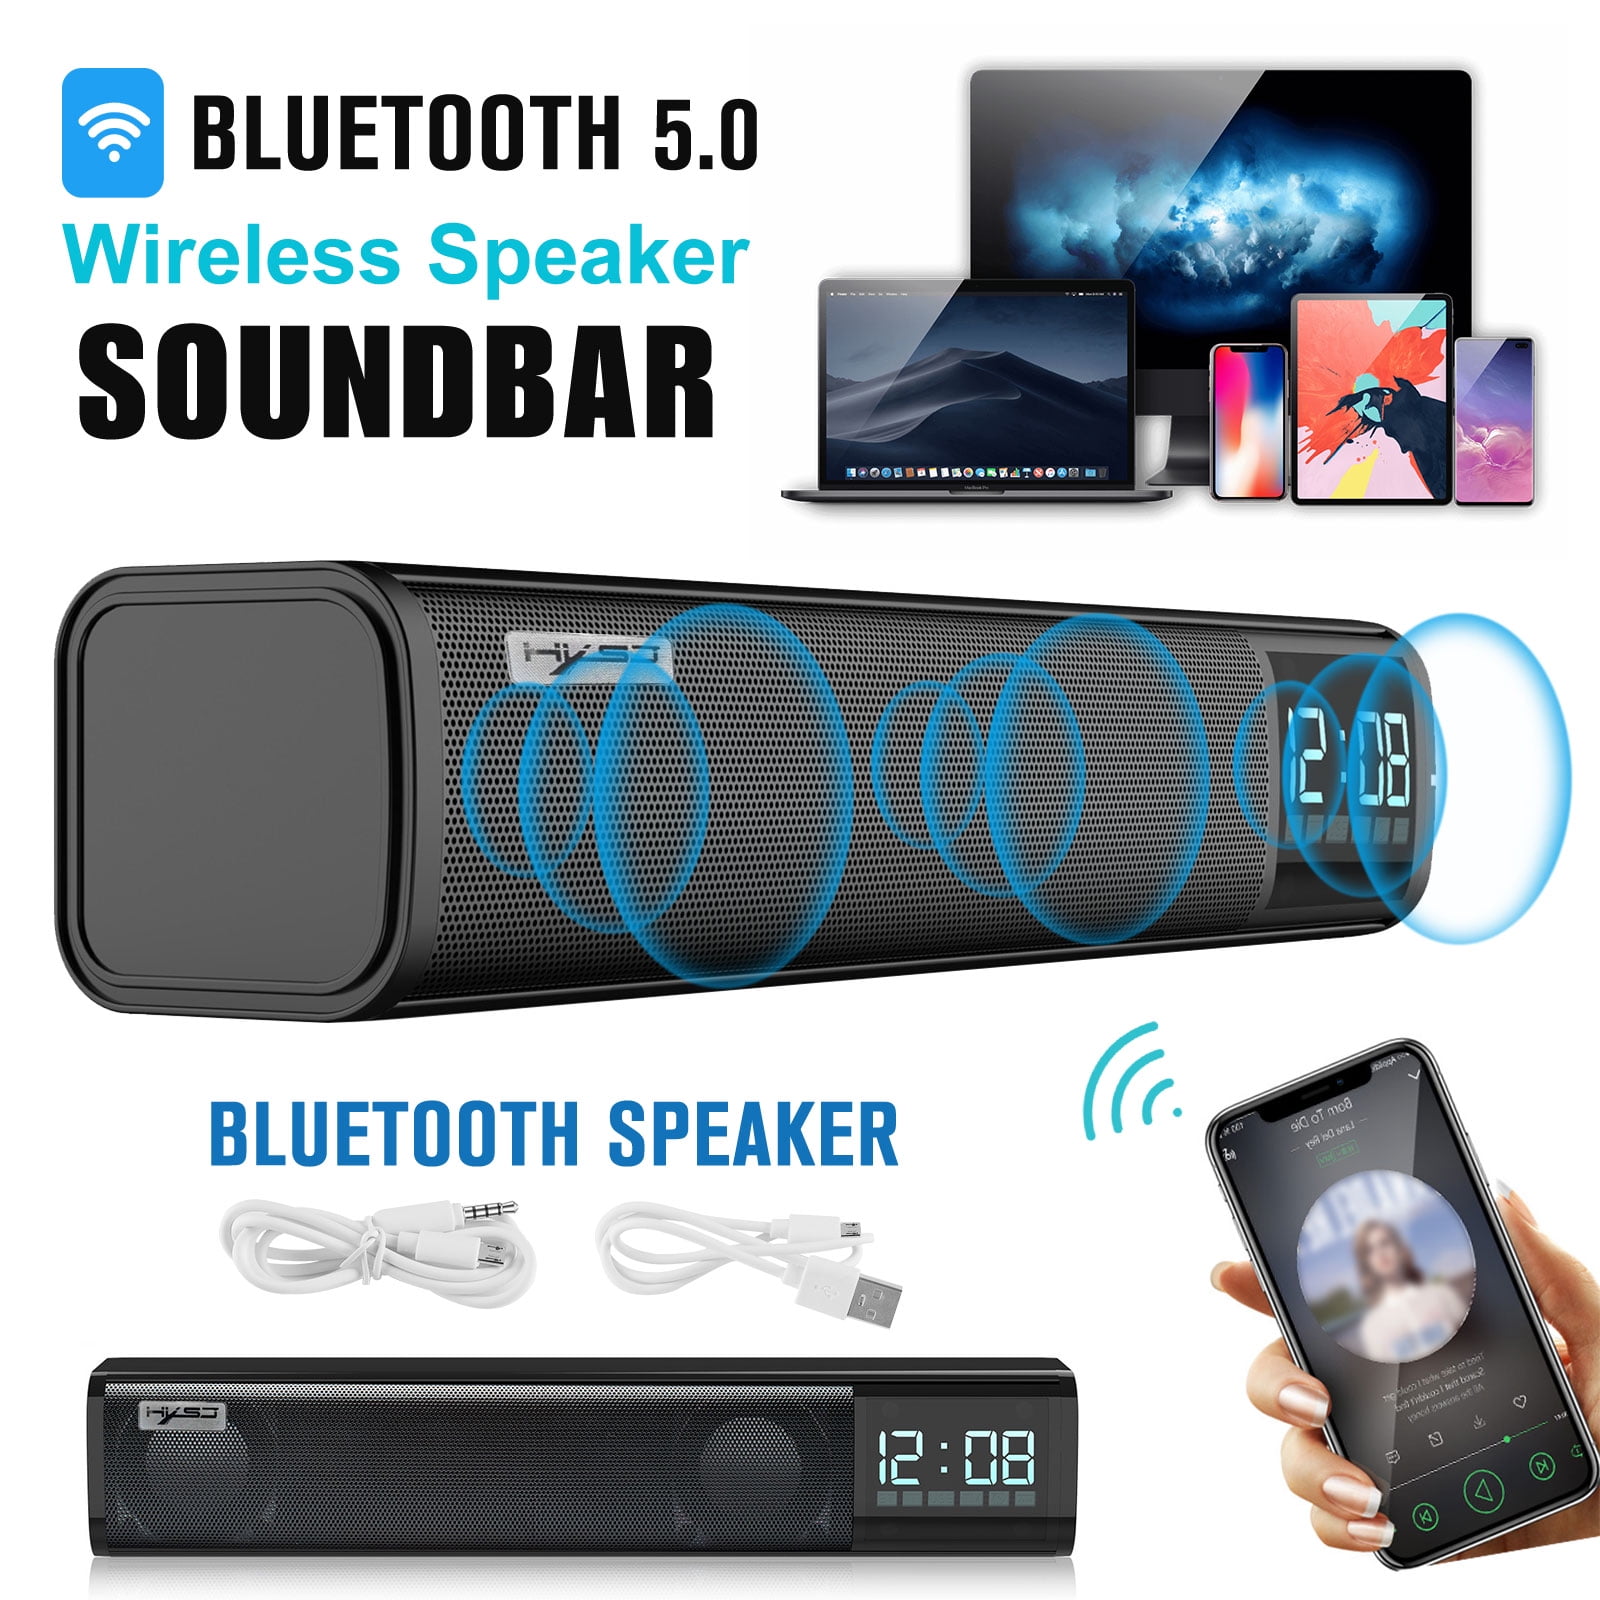 wireless bluetooth soundbar for tv